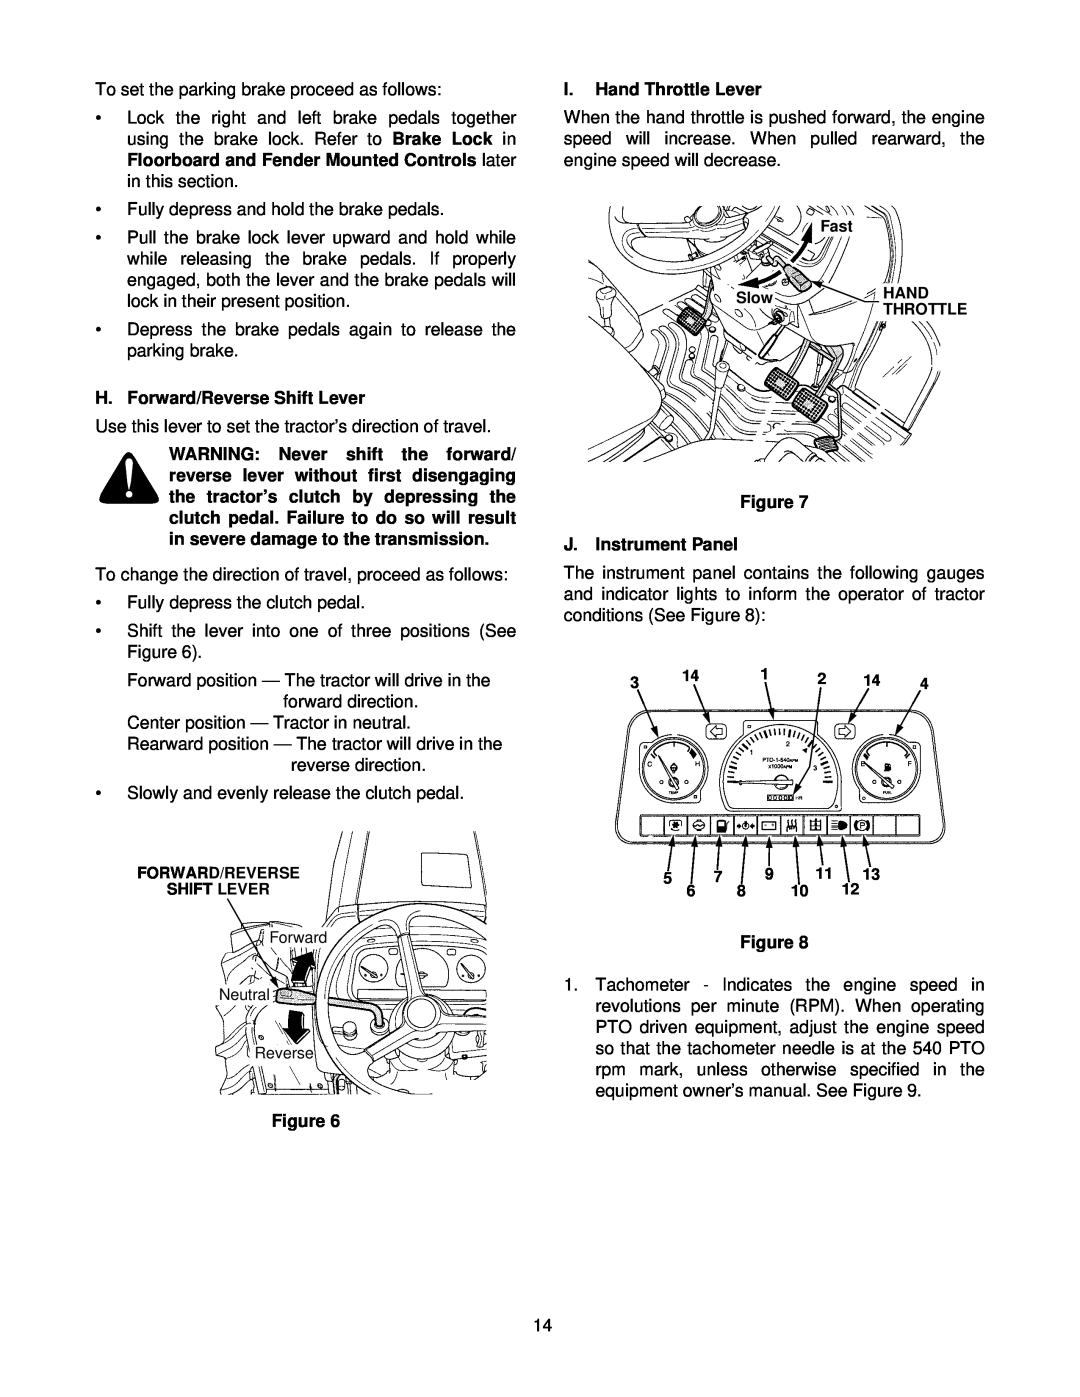 Cub Cadet 8354 manual H. Forward/Reverse Shift Lever, I.Hand Throttle Lever, Figure J. Instrument Panel 